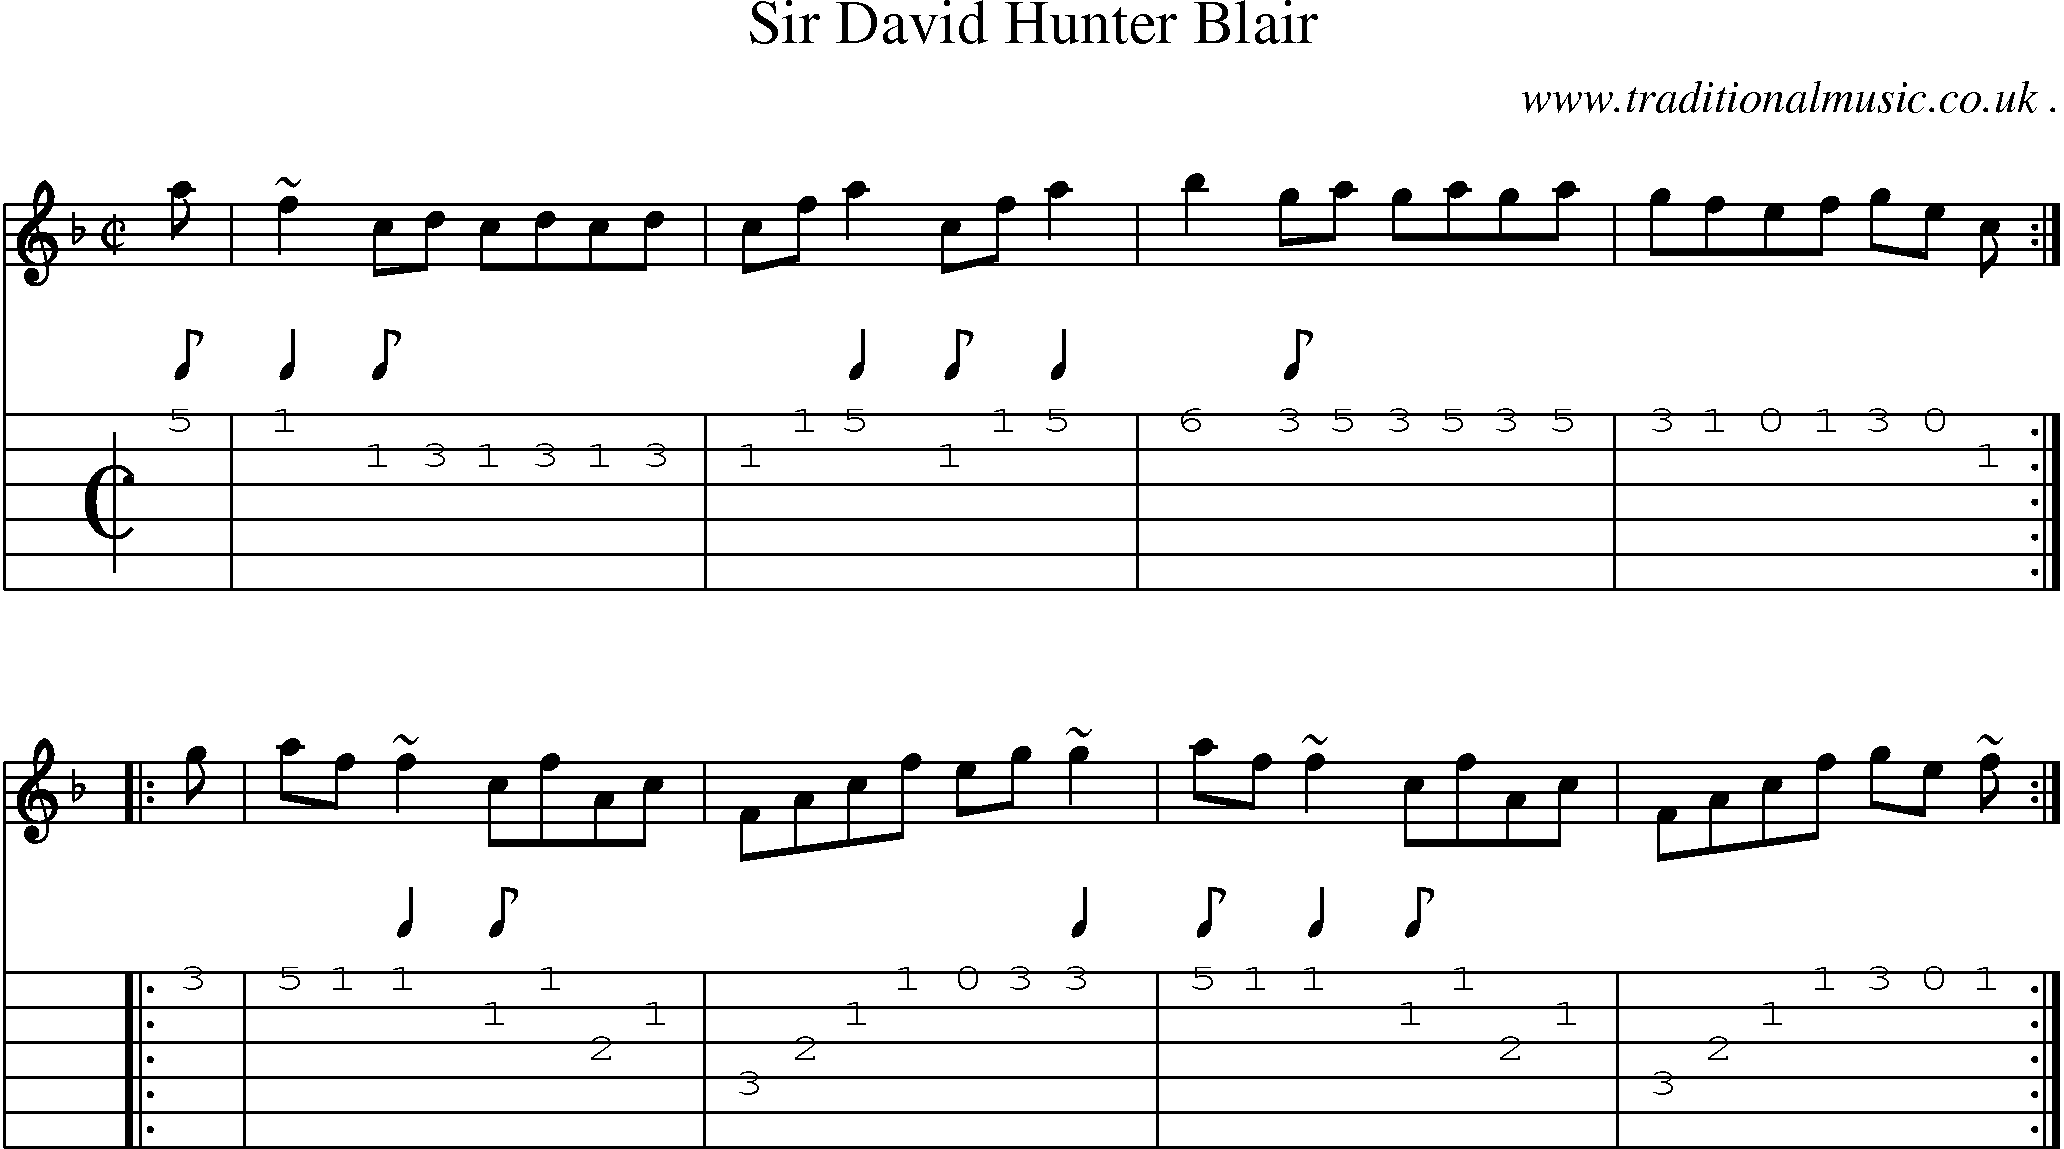 Sheet-music  score, Chords and Guitar Tabs for Sir David Hunter Blair